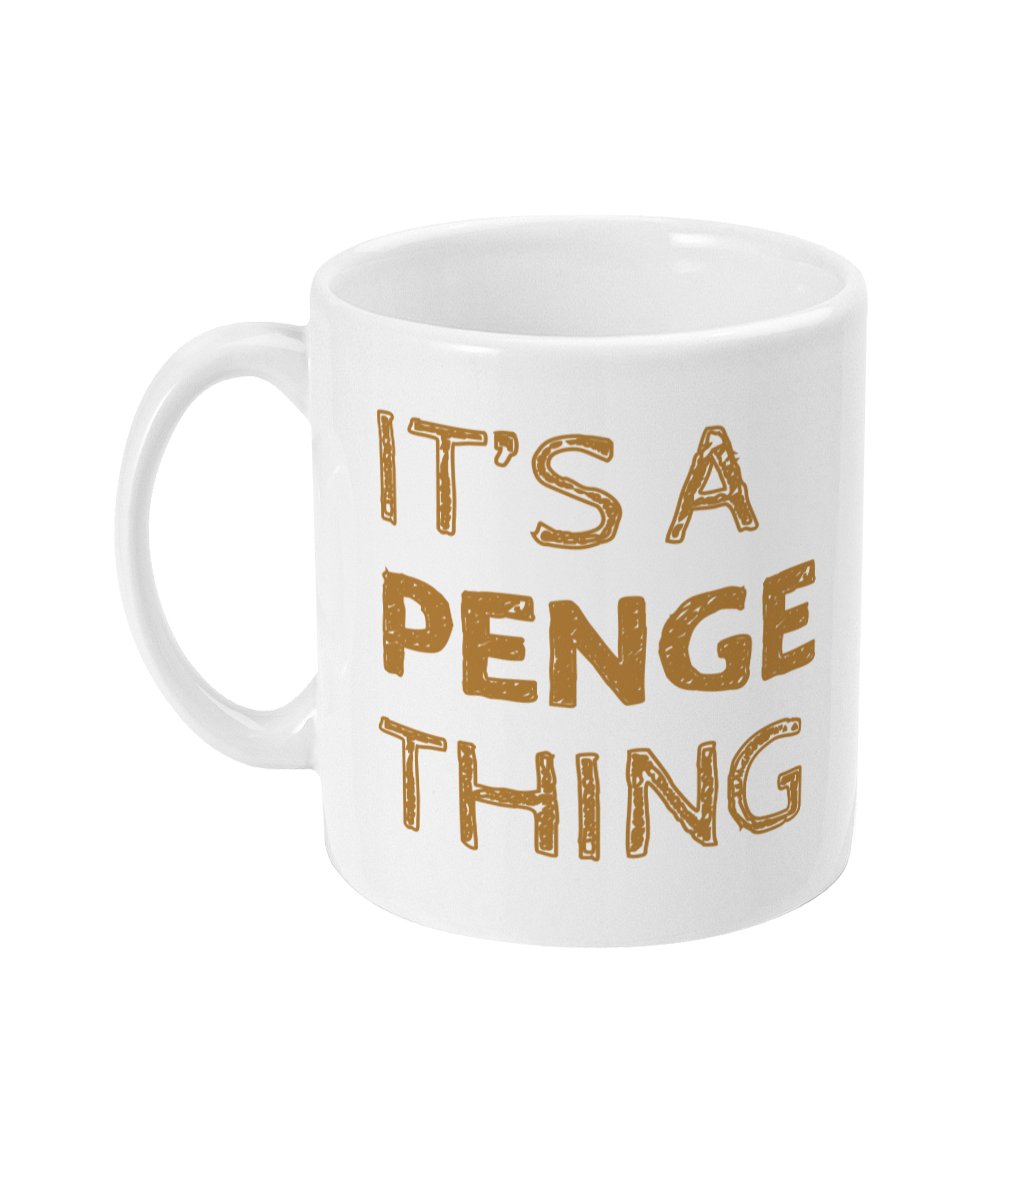 'It's a Penge thing' Mug - Southey Brewery Co.